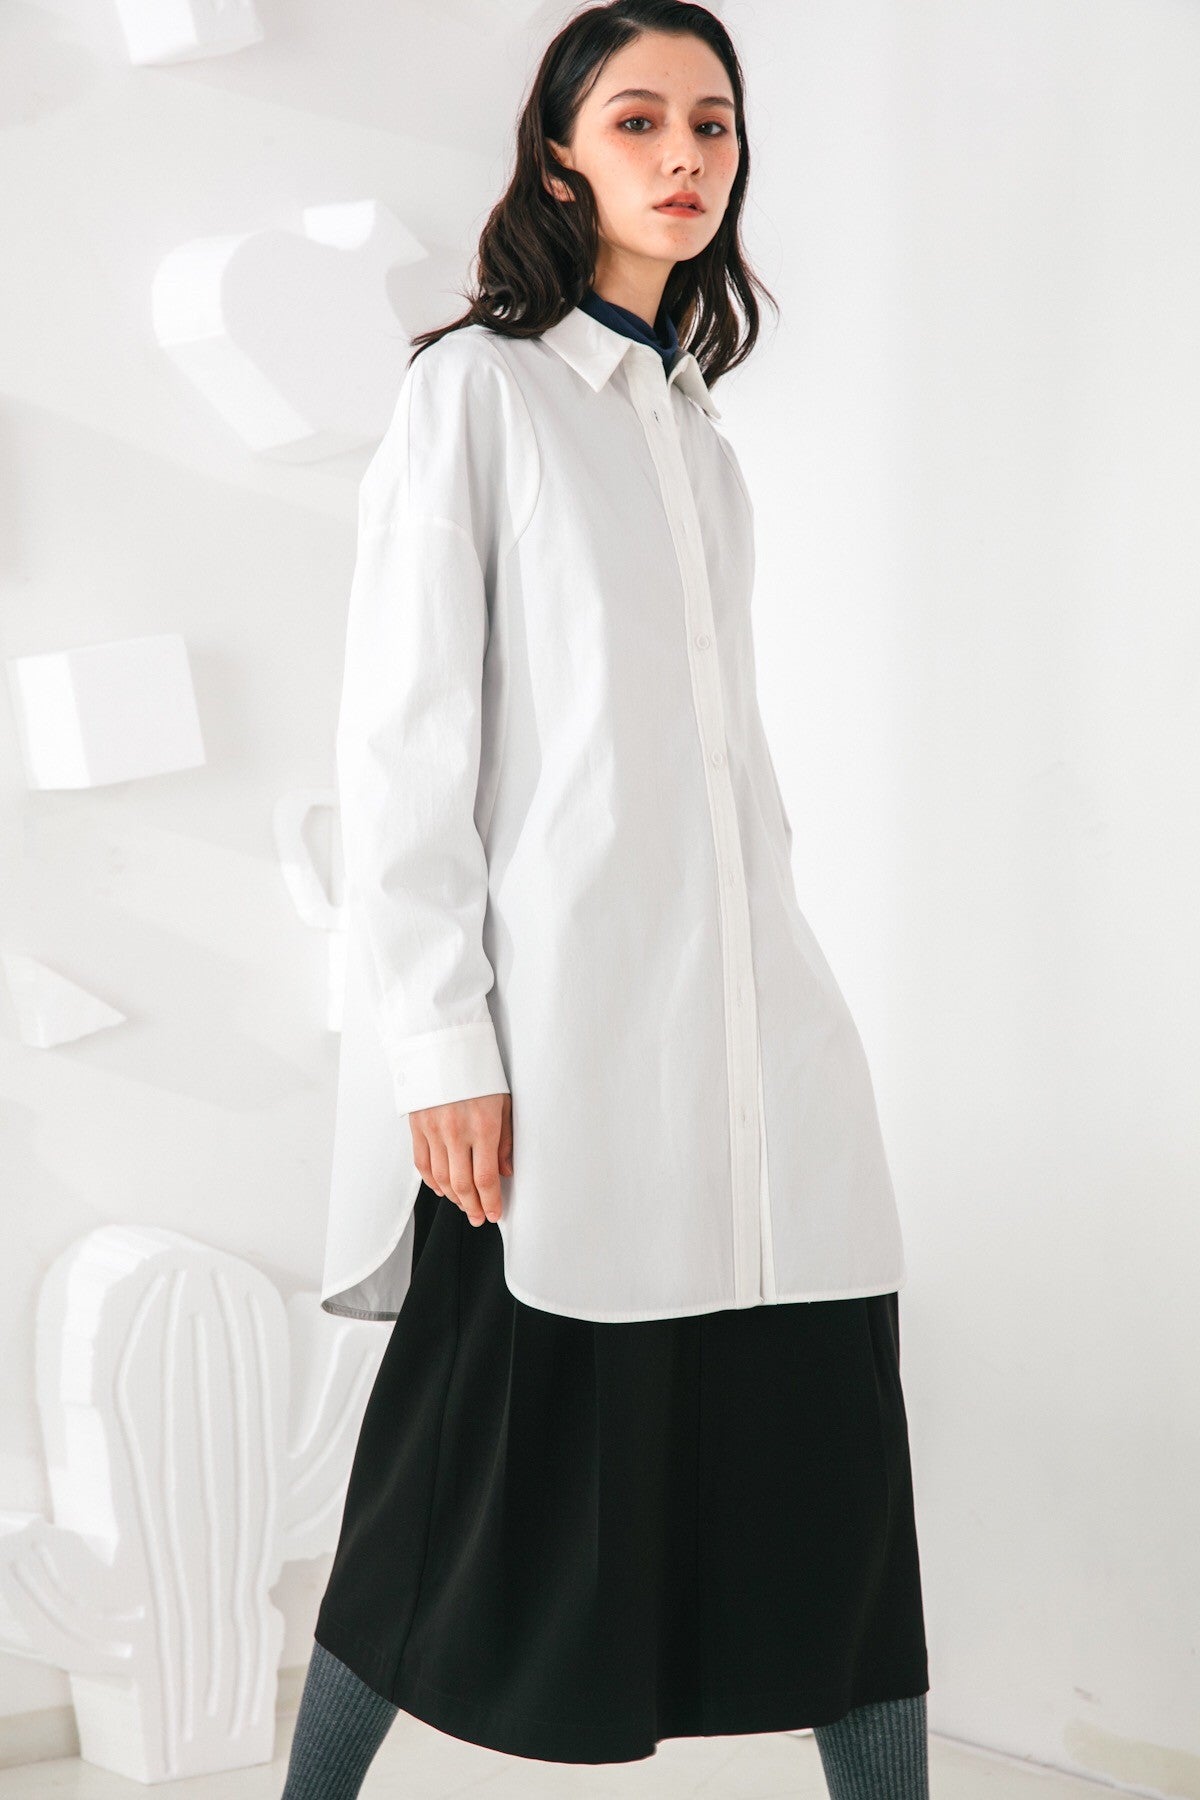 SKYE San Francisco SF shop ethical modern minimalist quality women clothing fashion Brigitte Tunic Shirt white 6